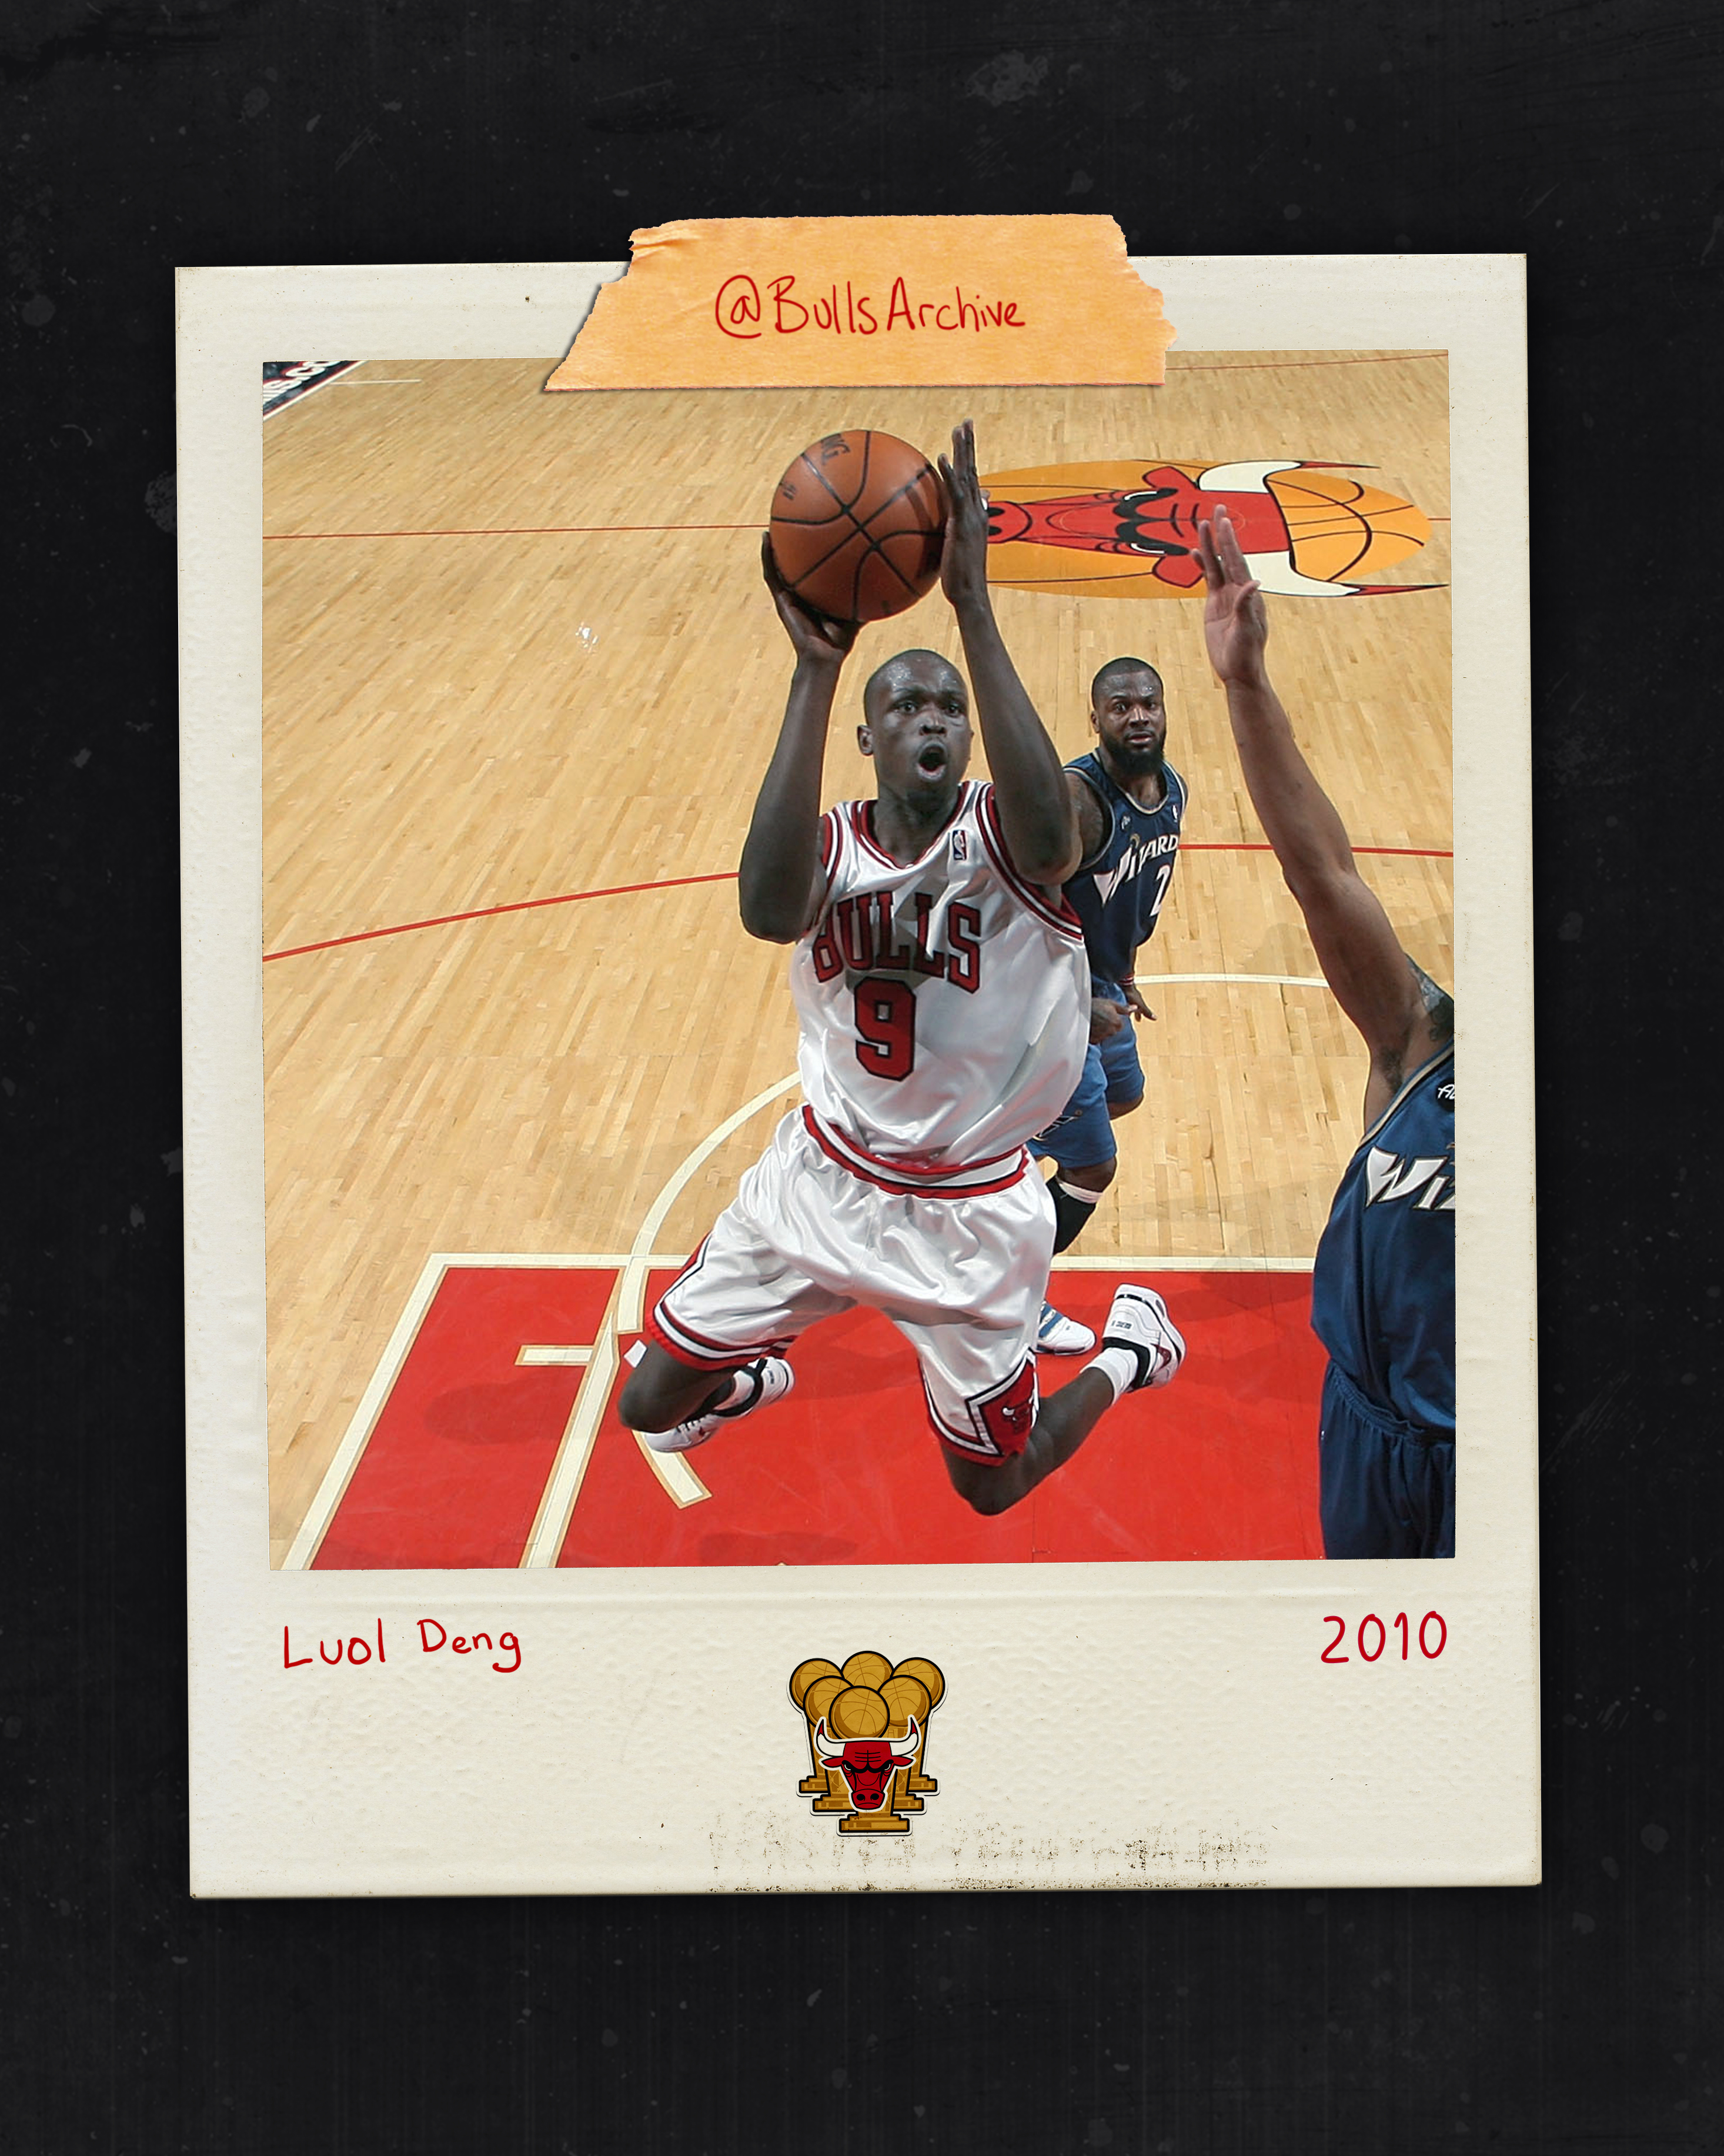 Chicago Bulls Archive (@BullsArchive) / X